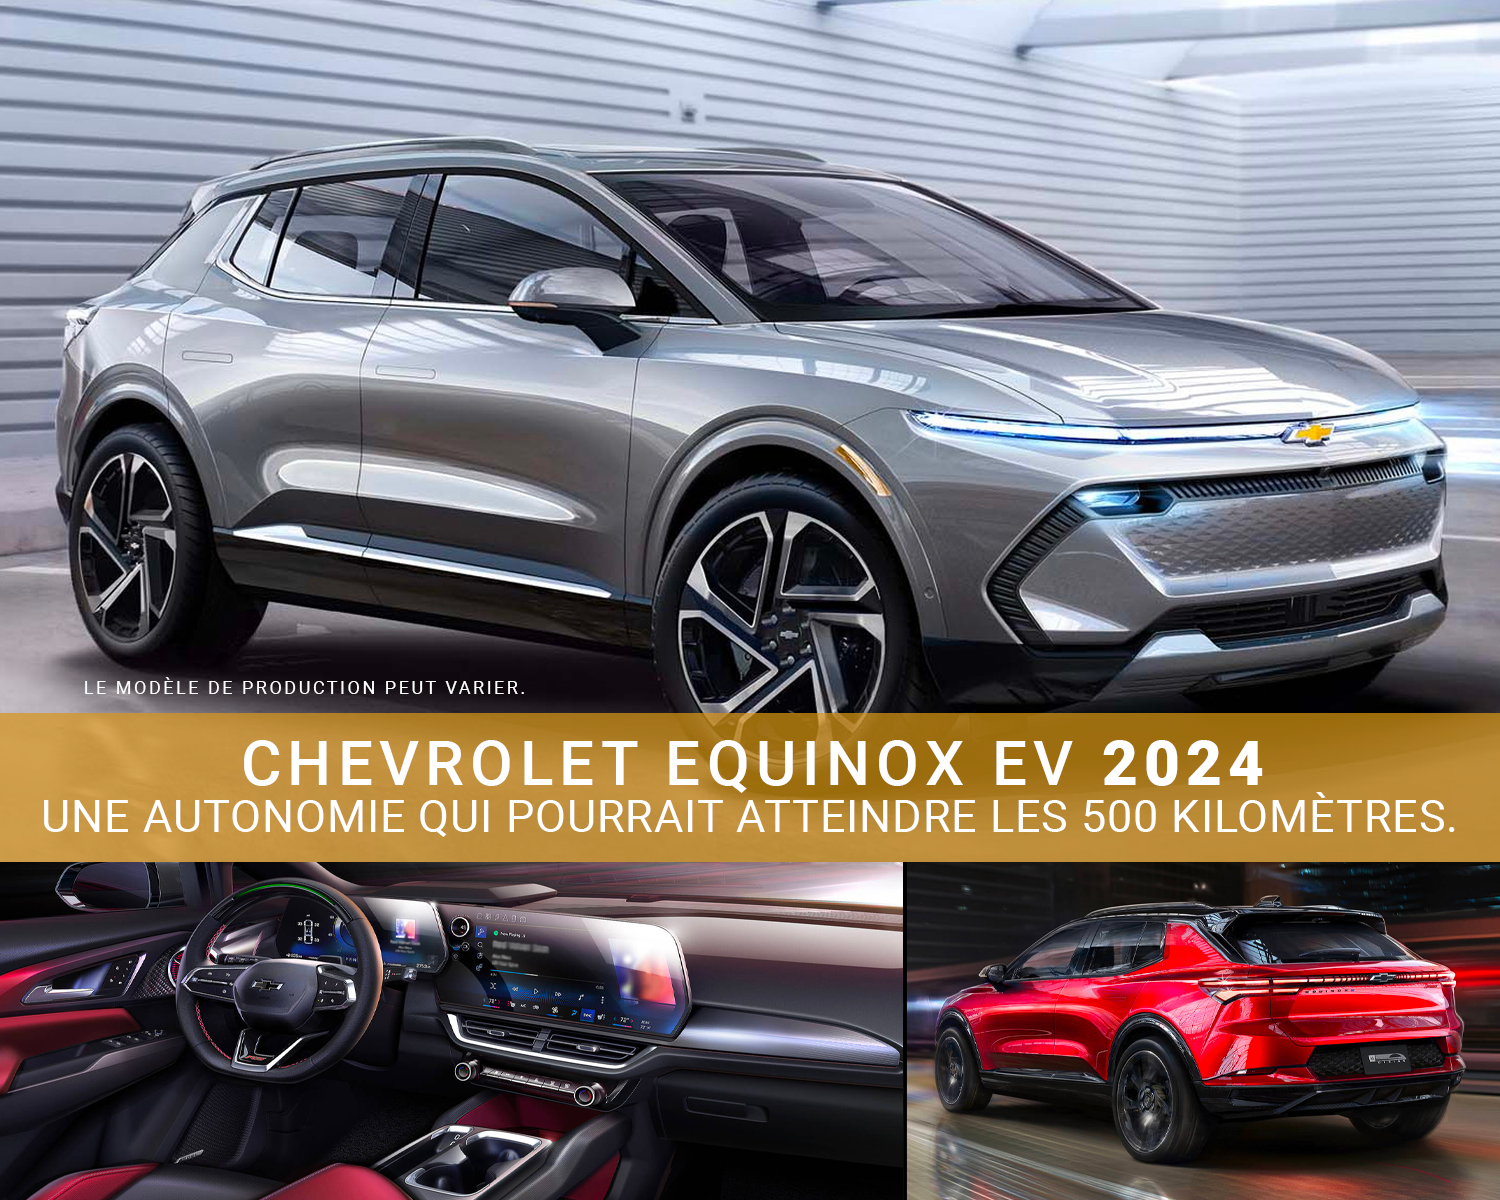 Chevrolet Equinox EV 2024